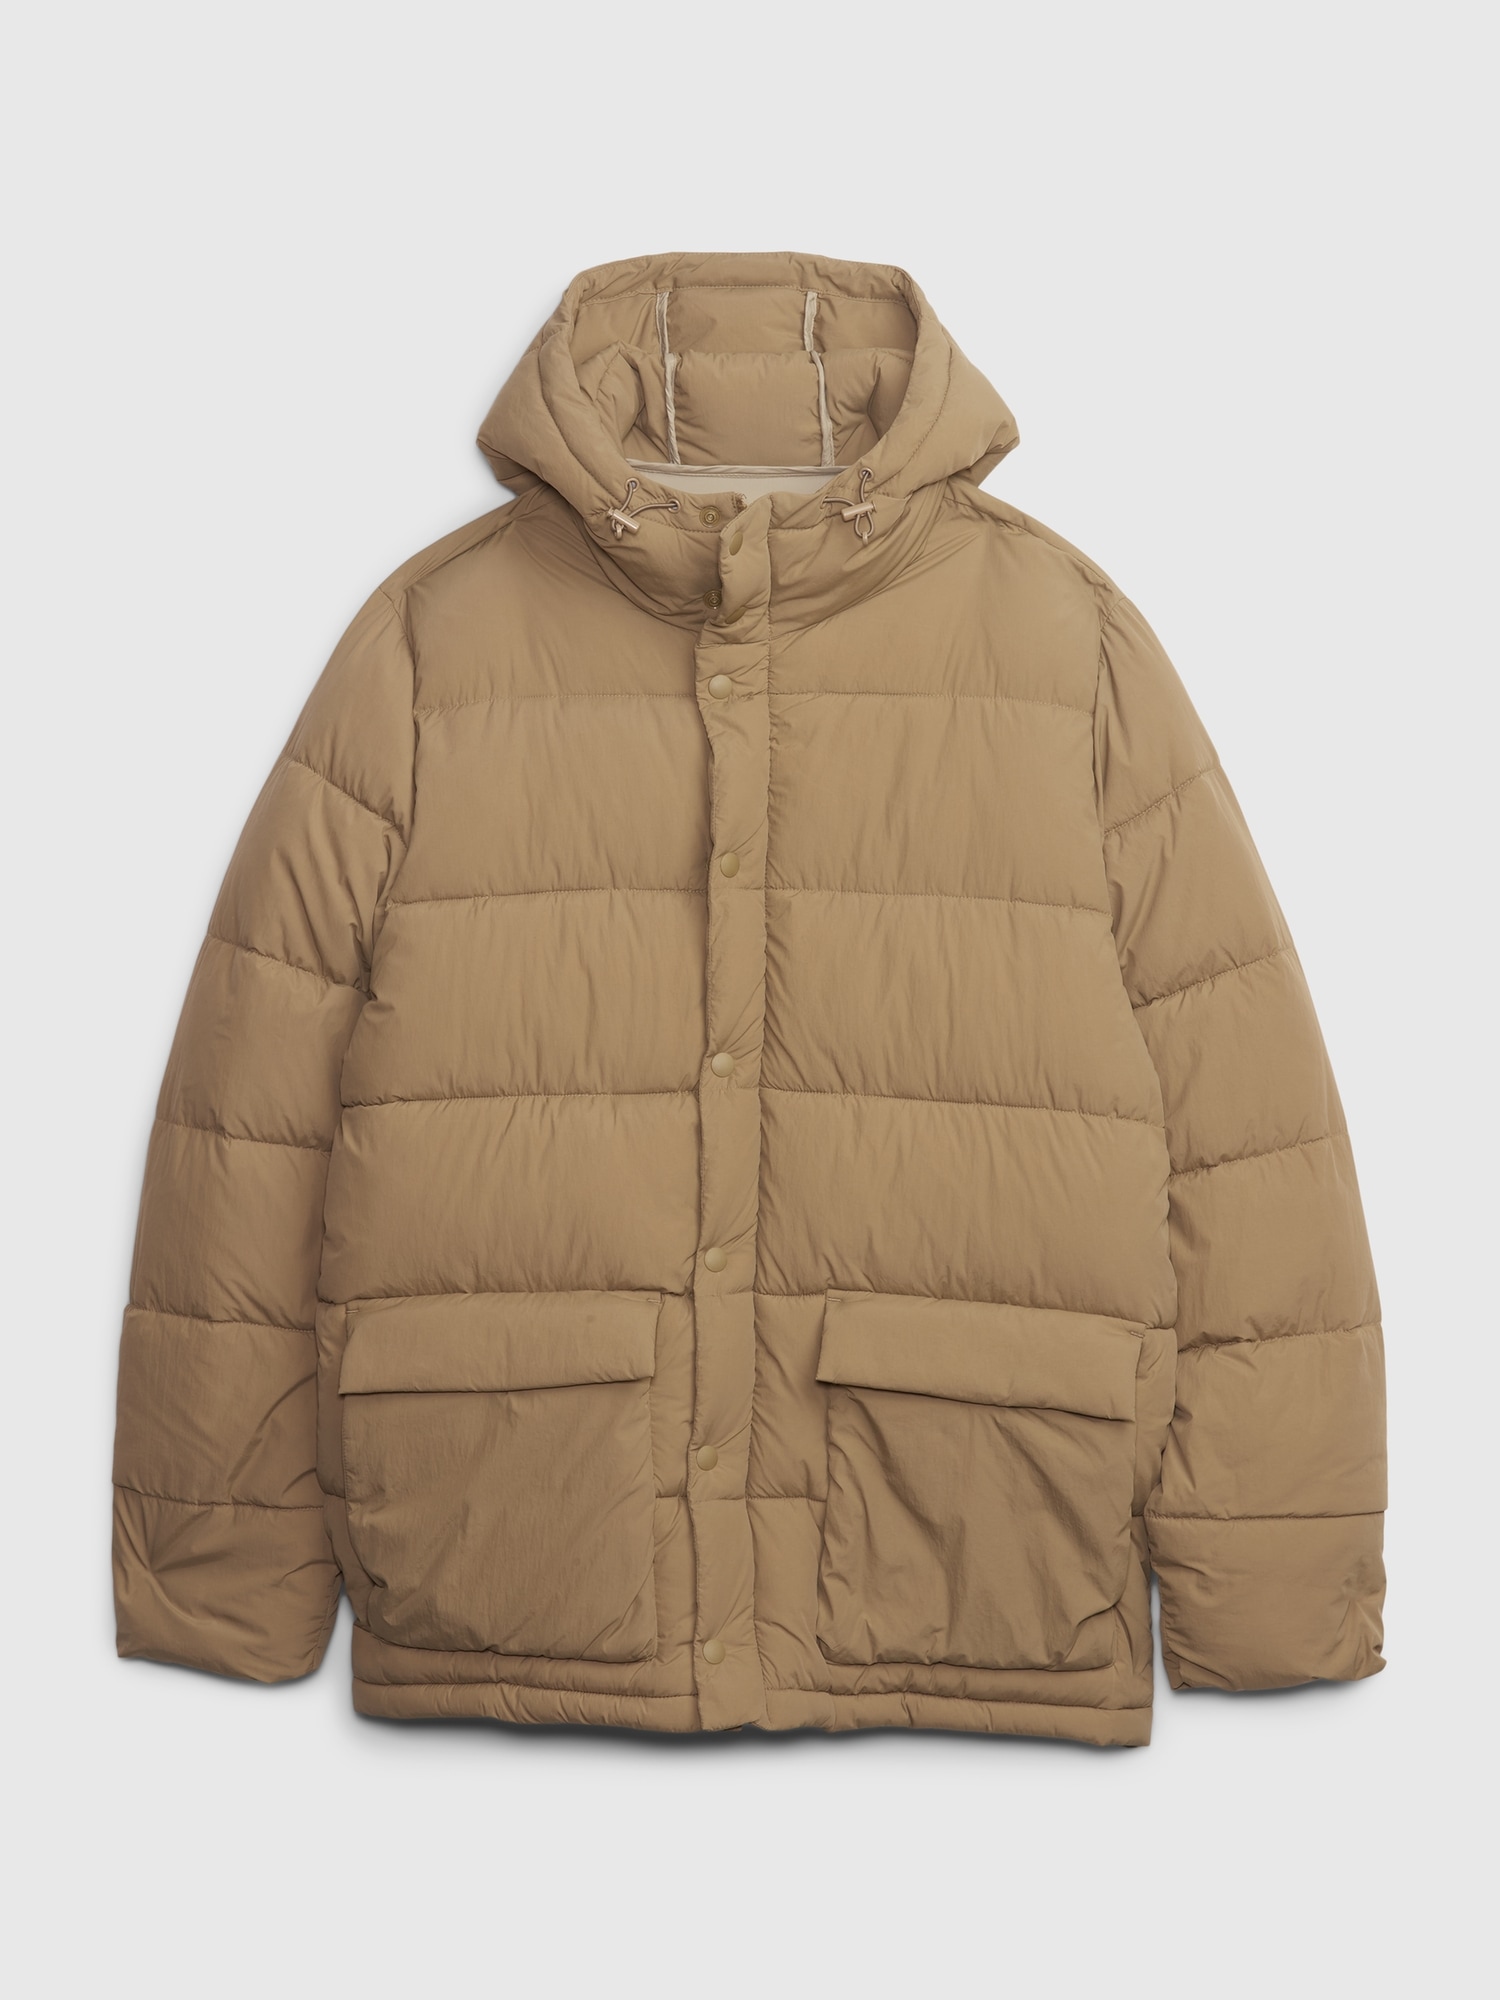 Guess Women Winter Longline Puffer Jaket Coat Fits SizeXS/S/M Extra Warmth